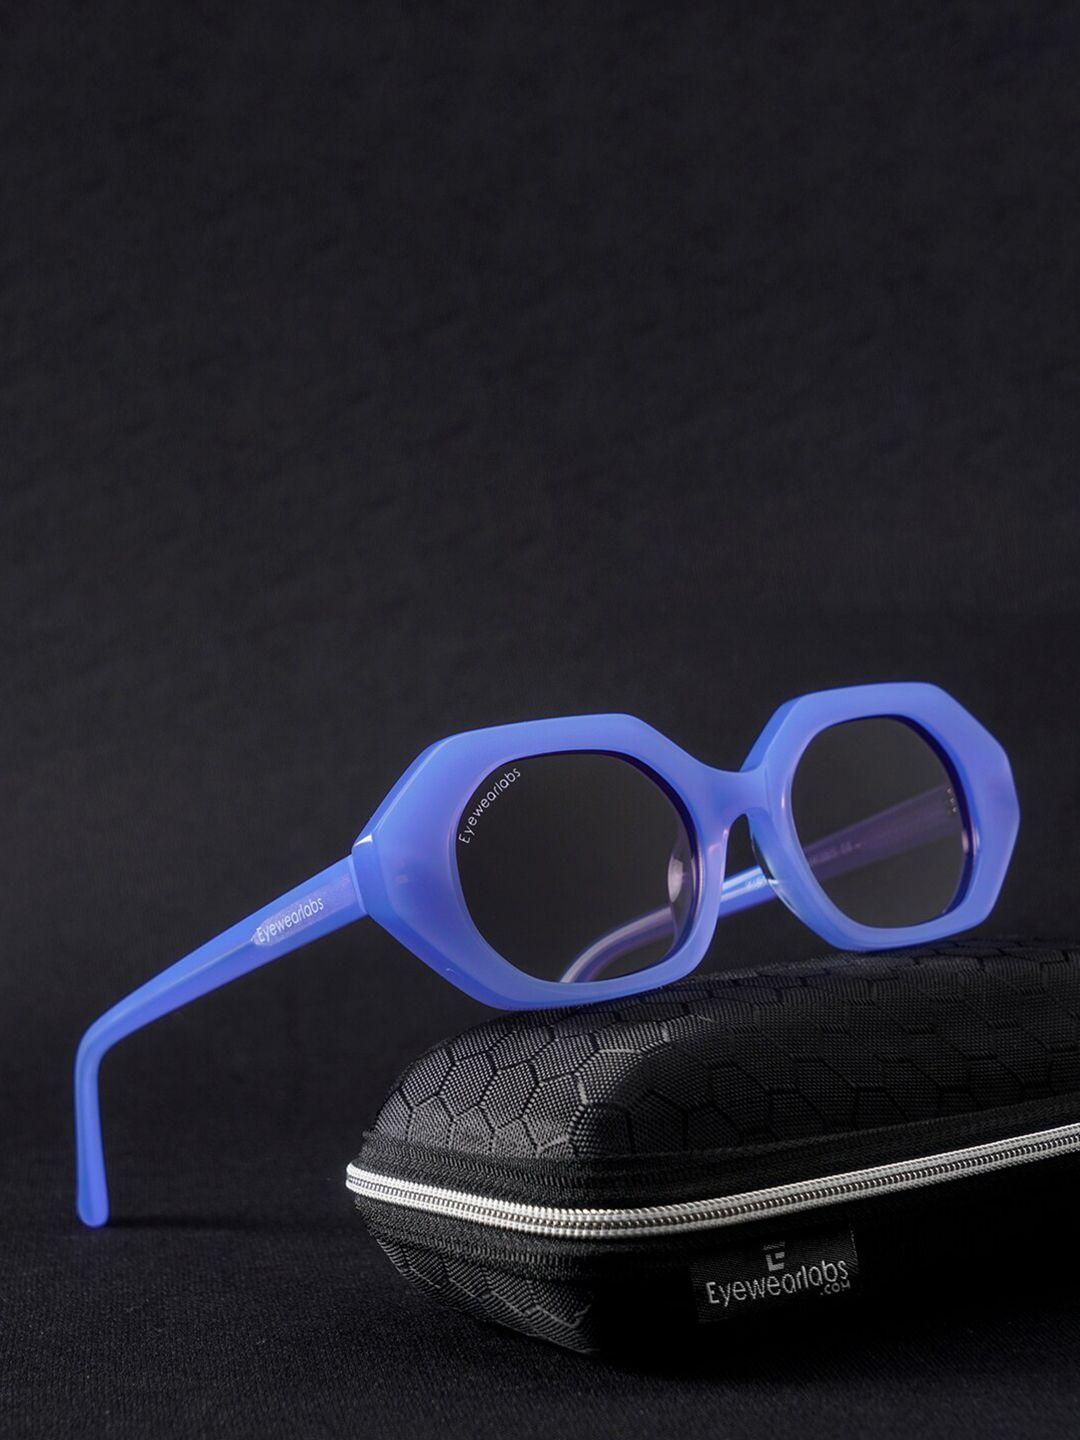 eyewearlabs women lens & other sunglasses with polarised lens ccassiepblsc2el1182